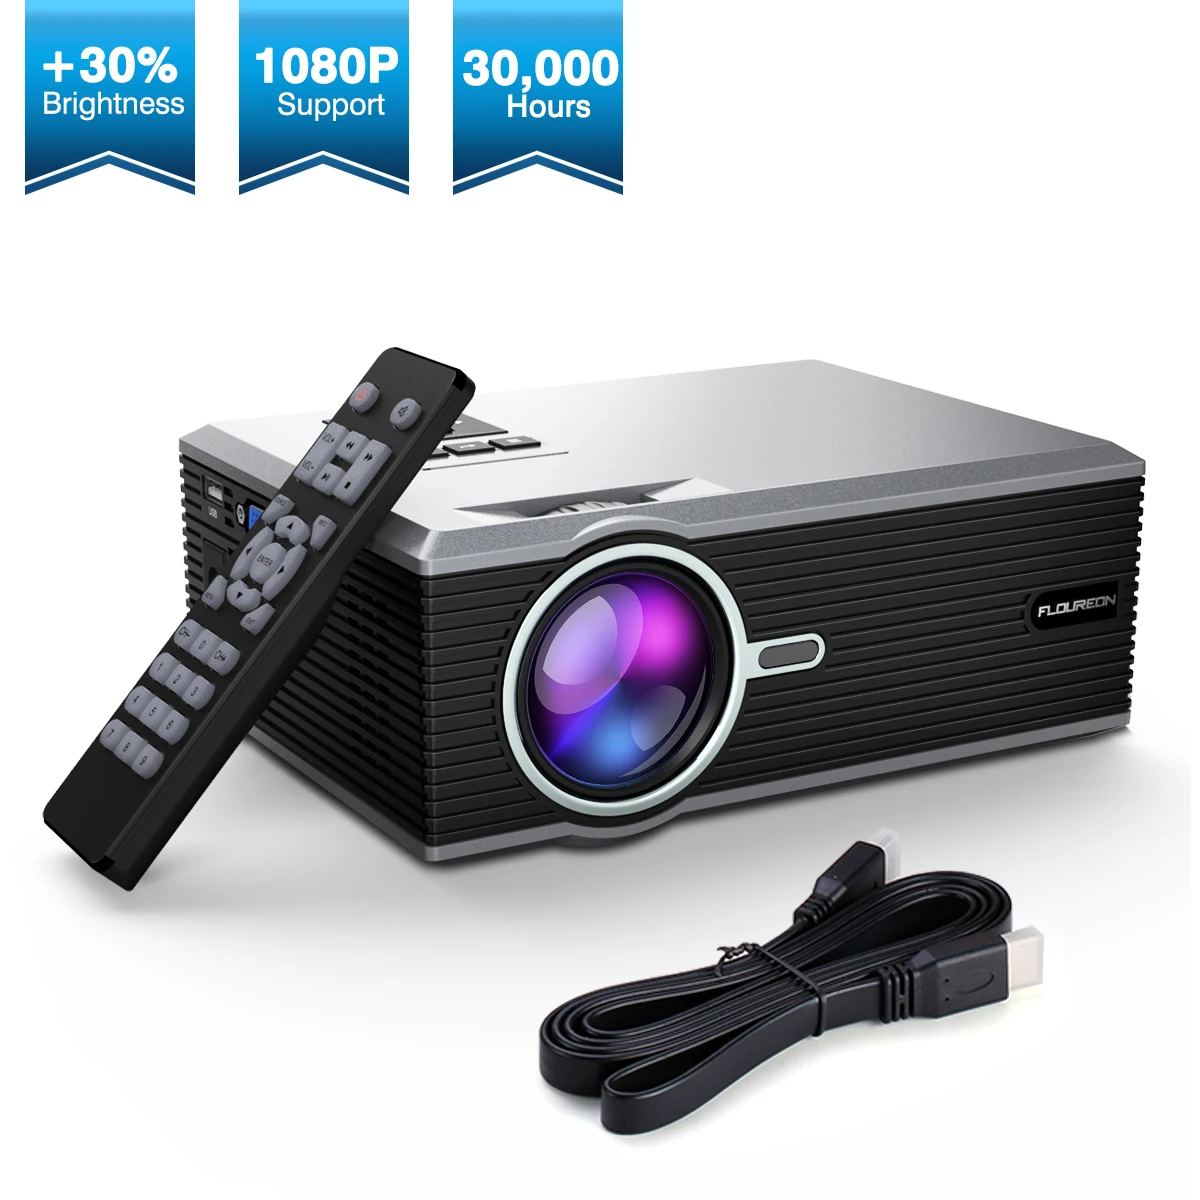 800*480 HD проектор для дома и отдыха на открытом воздухе подключение с телефоном dvd-плеер PS4 ПК xbox Amazon Fire tv Stick HDMI